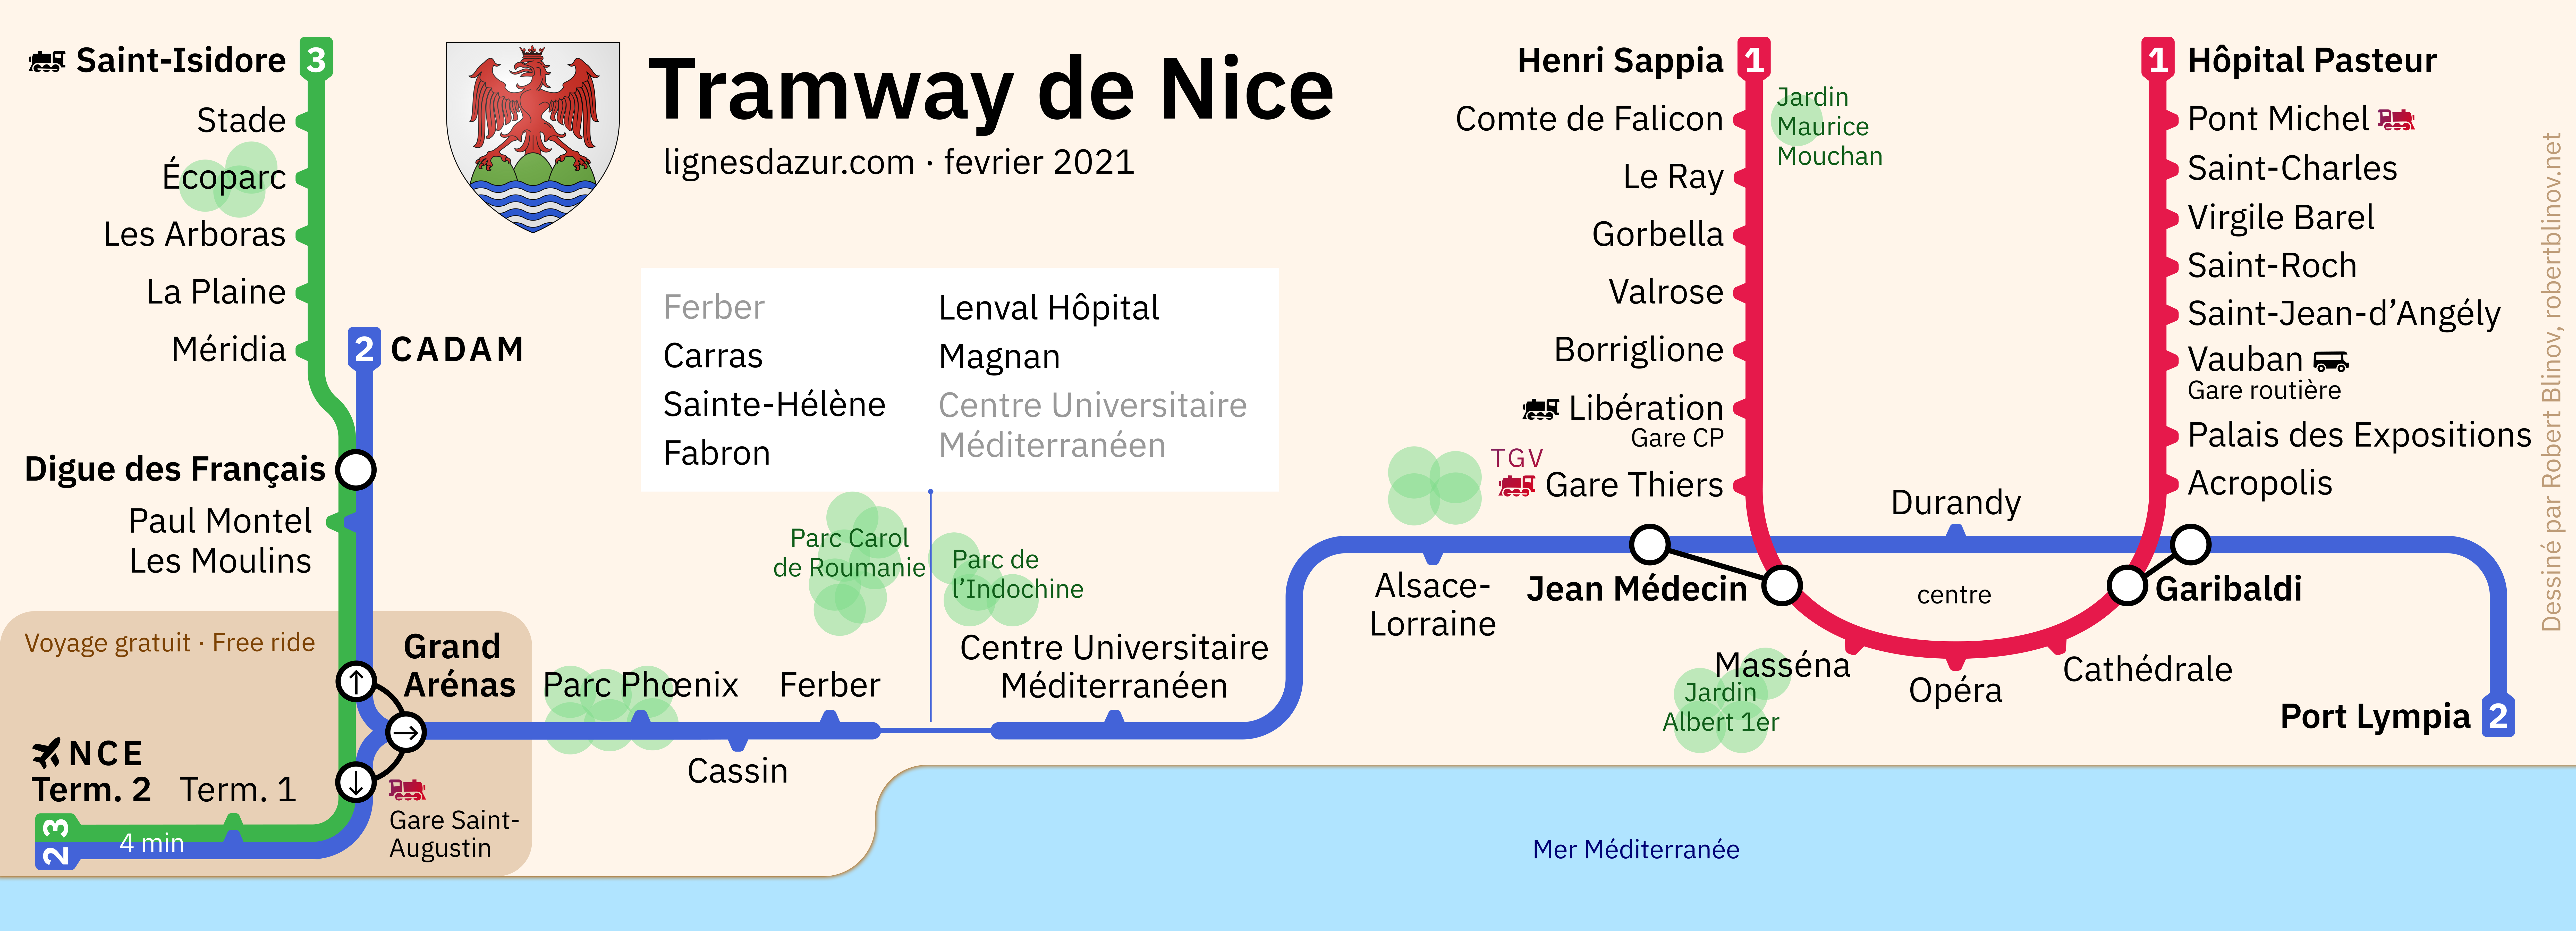 Nice tramway map, February 2021